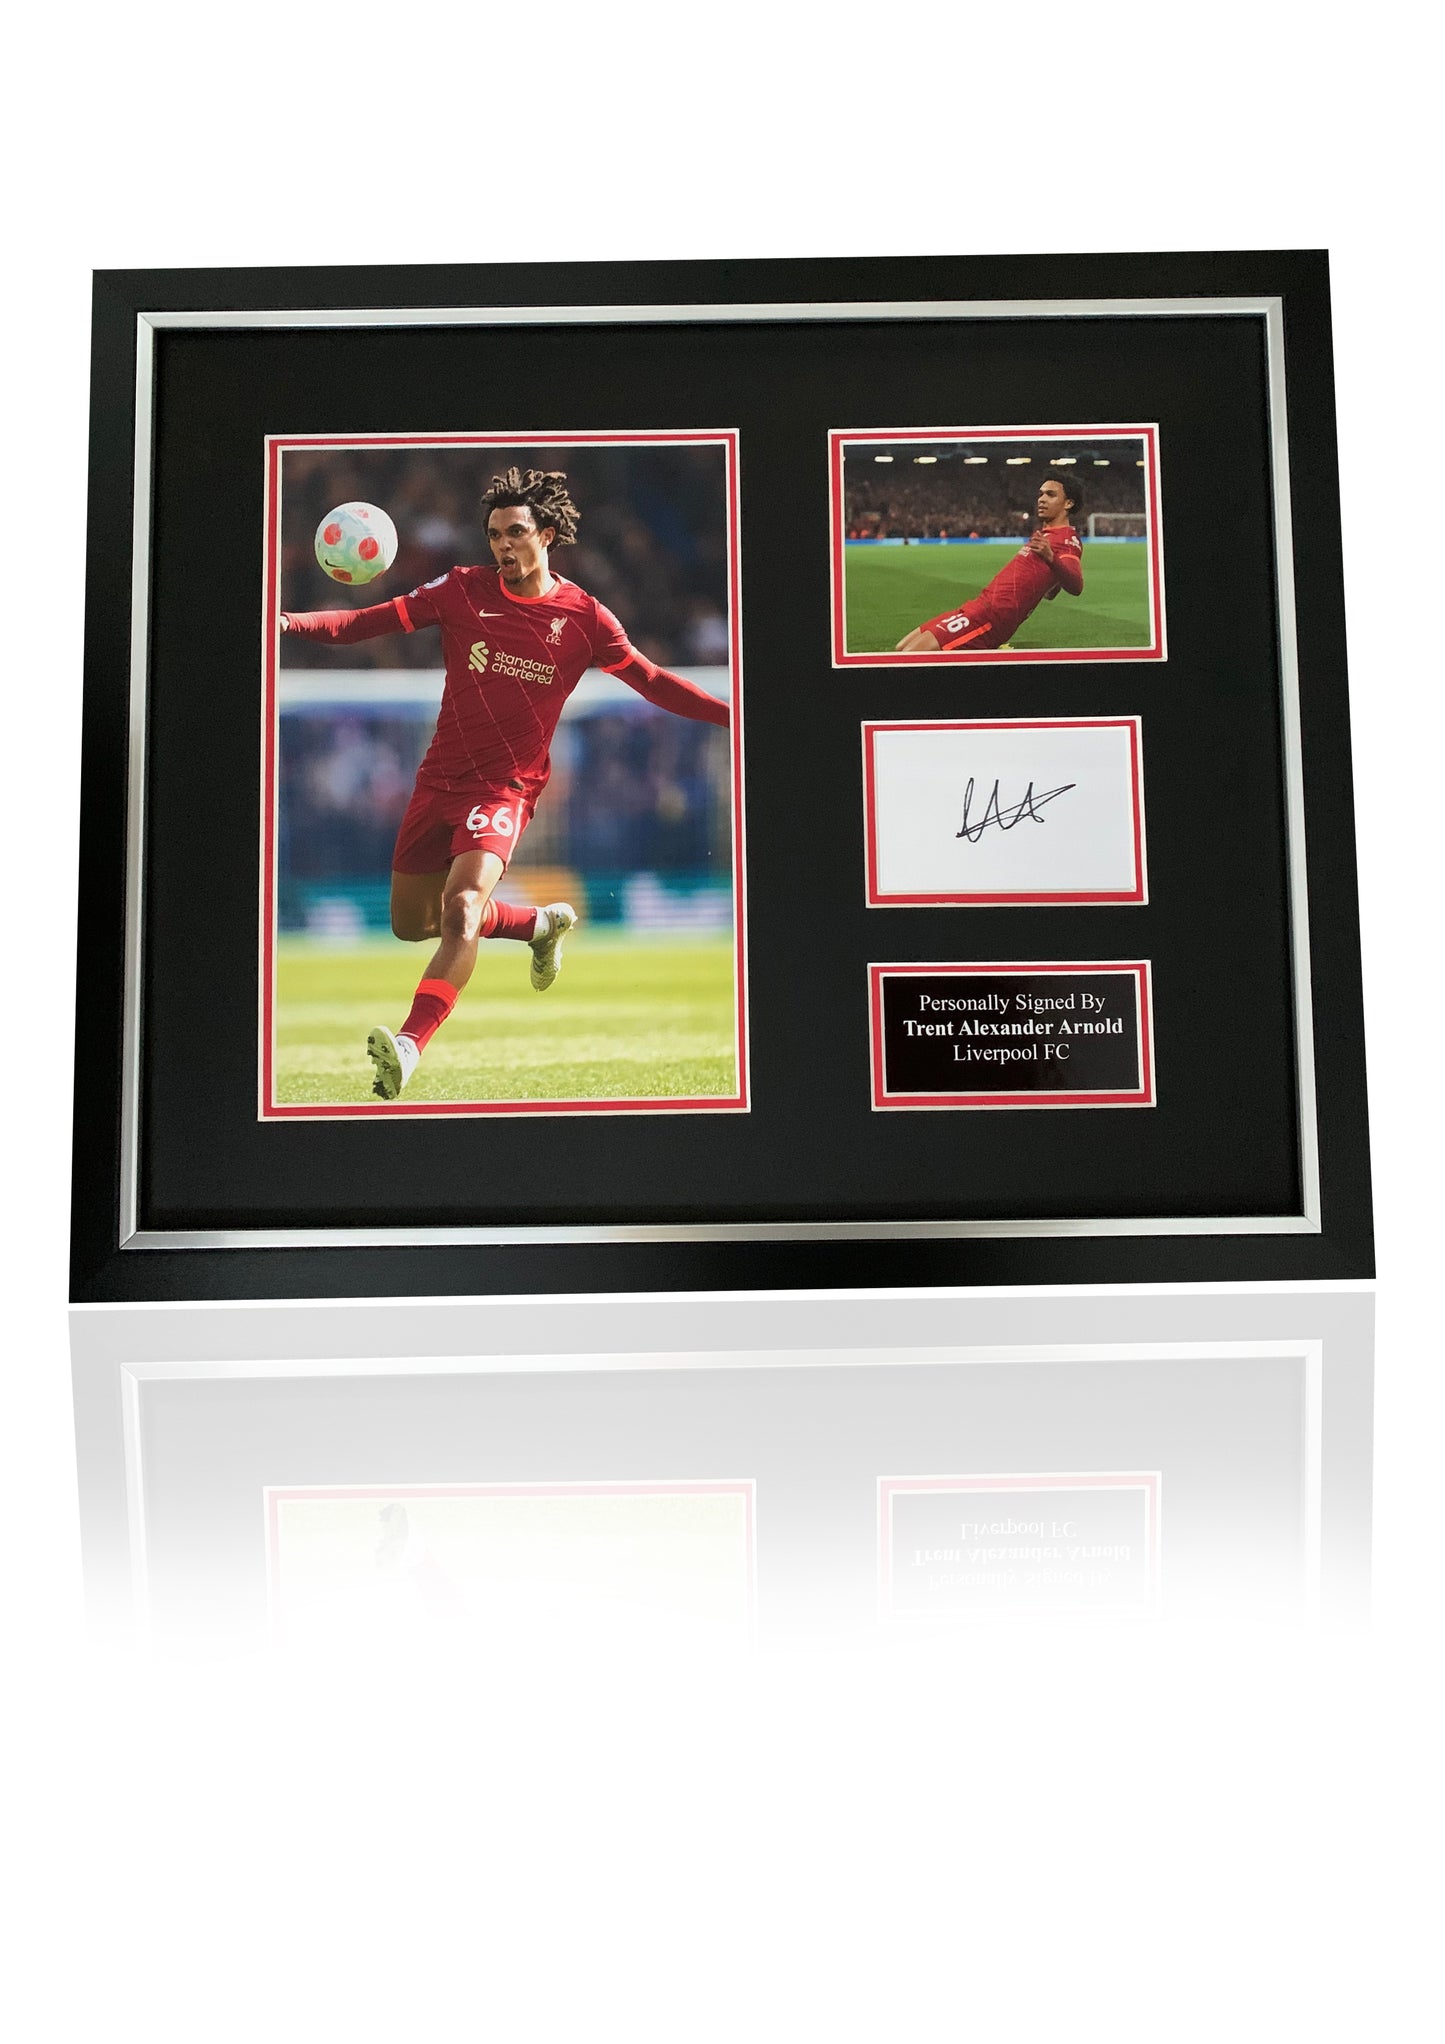 Trent Alexander Arnold Signed framed Liverpool FC photo card montage